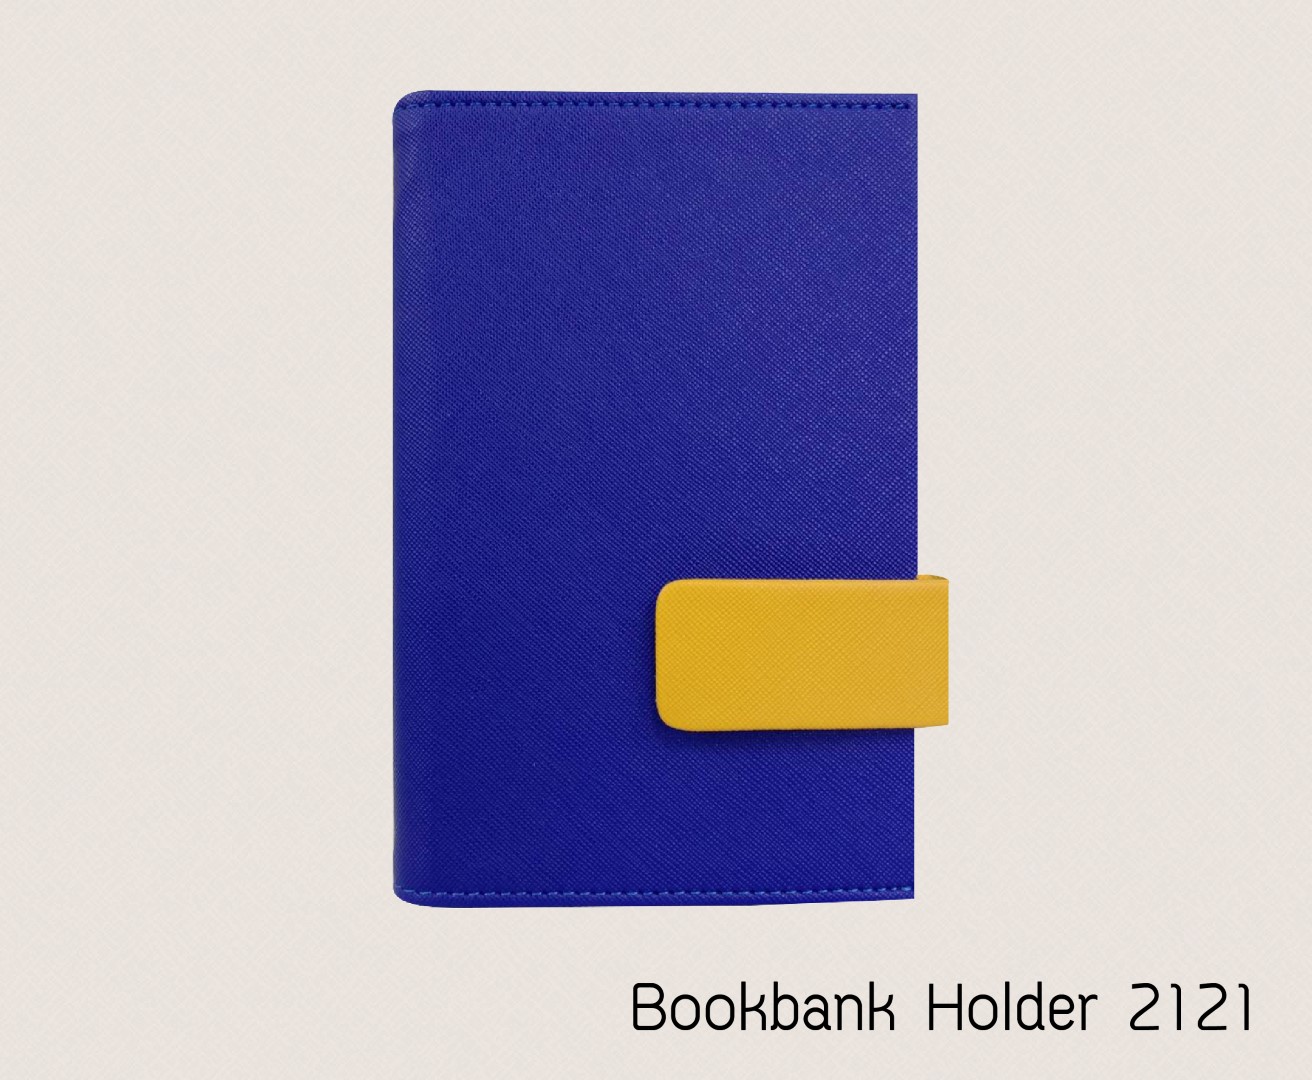 Bookbank holder 2121